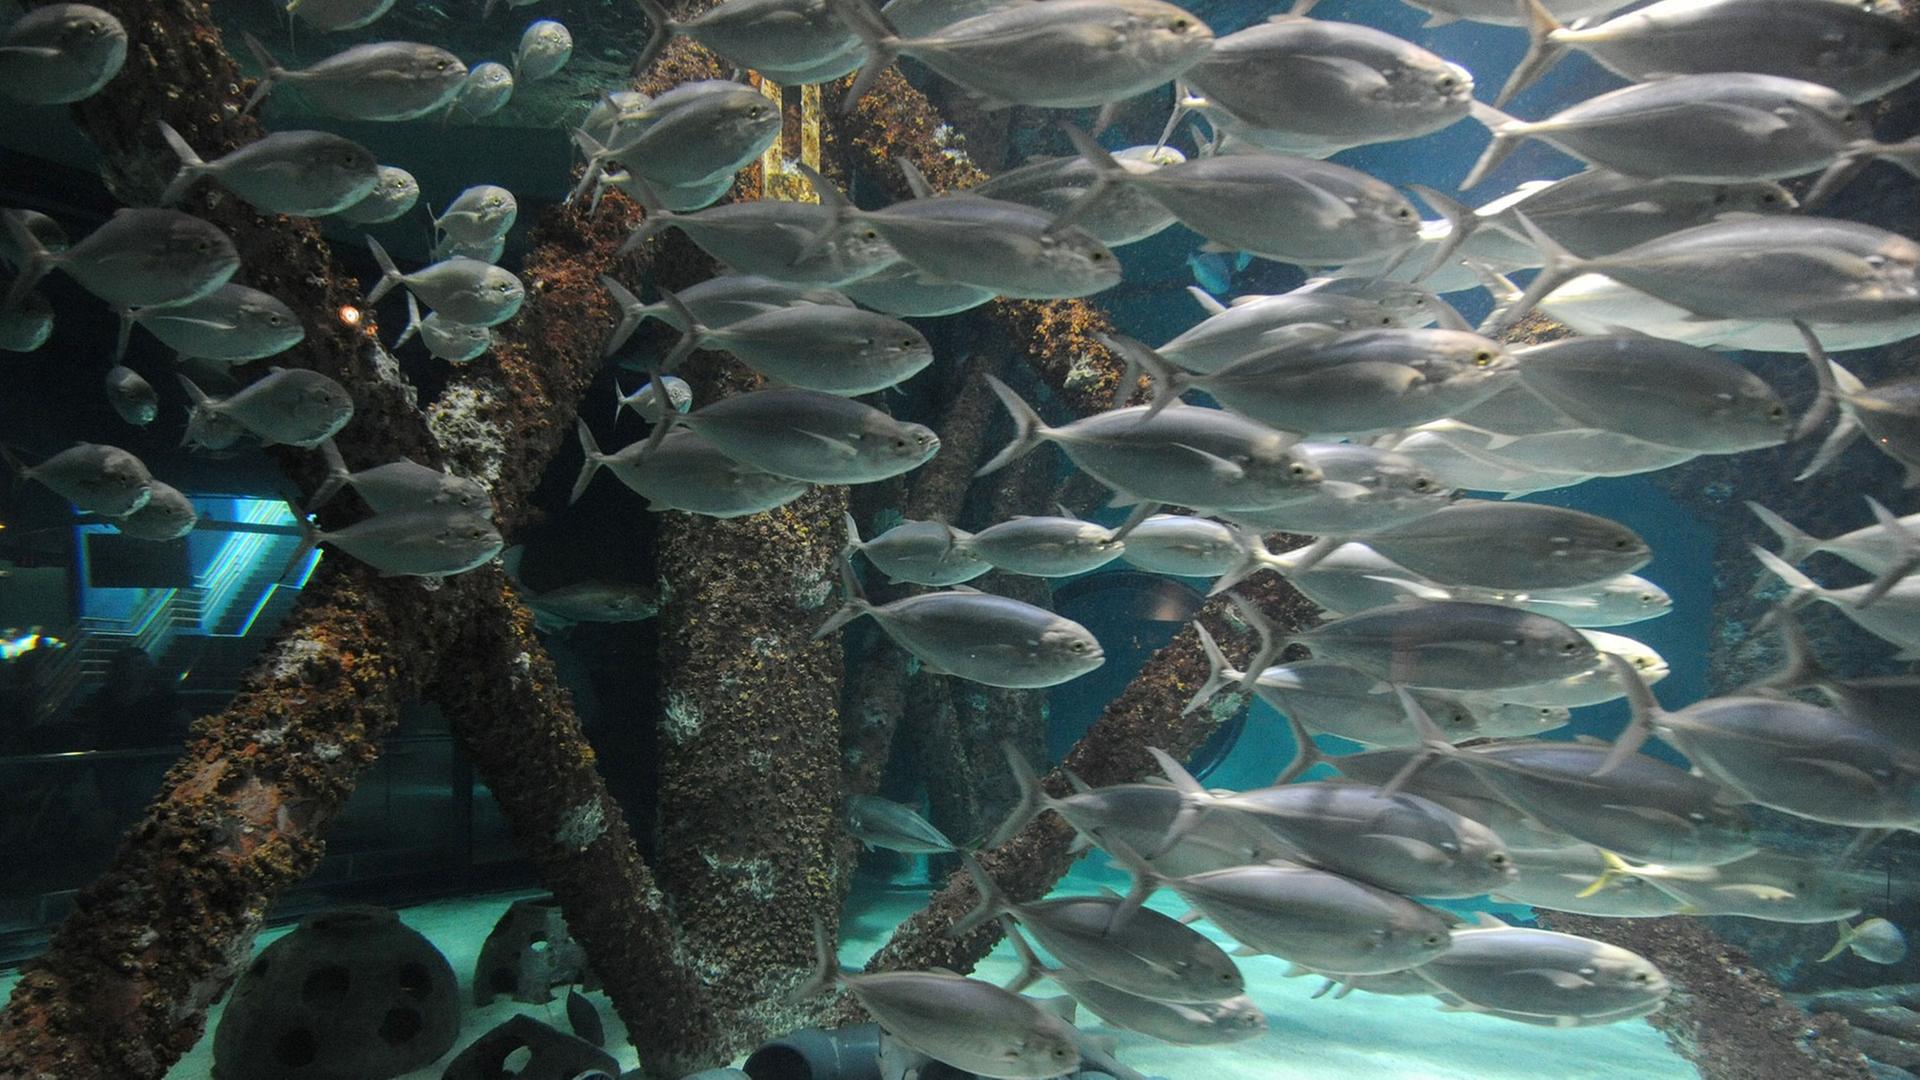 Fische im Aquarium of the Americas in New Orleans, USA